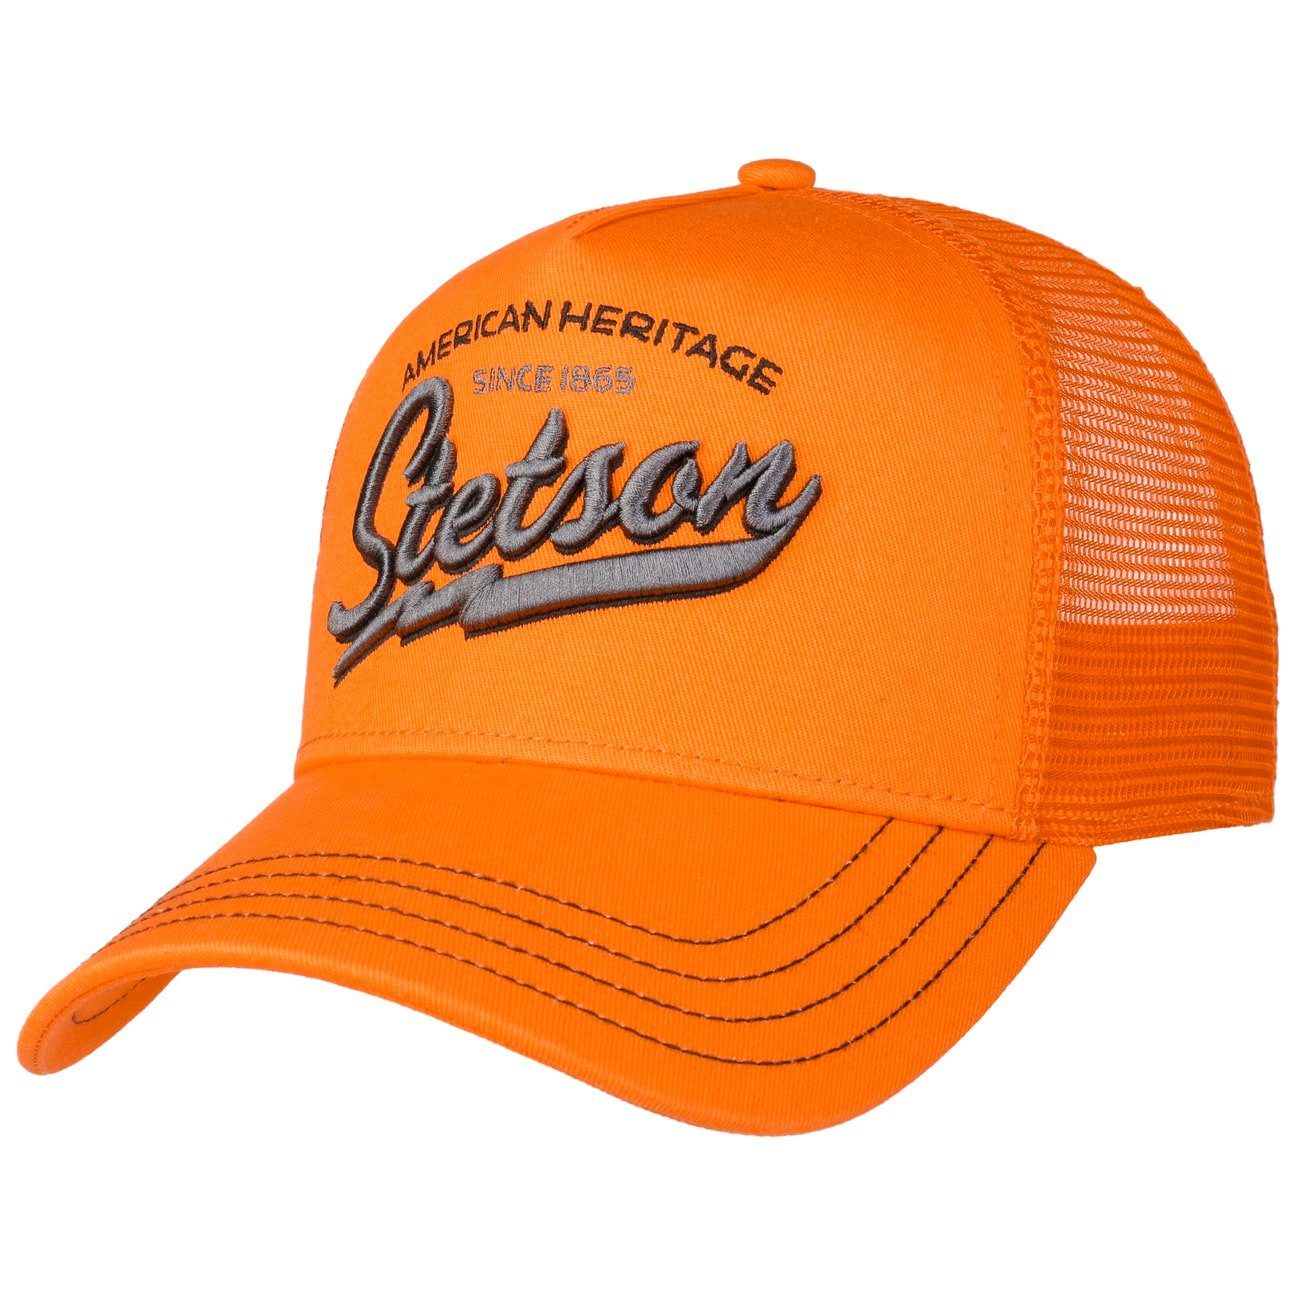 (1-St) orange Stetson Basecap Snapback Trucker Cap